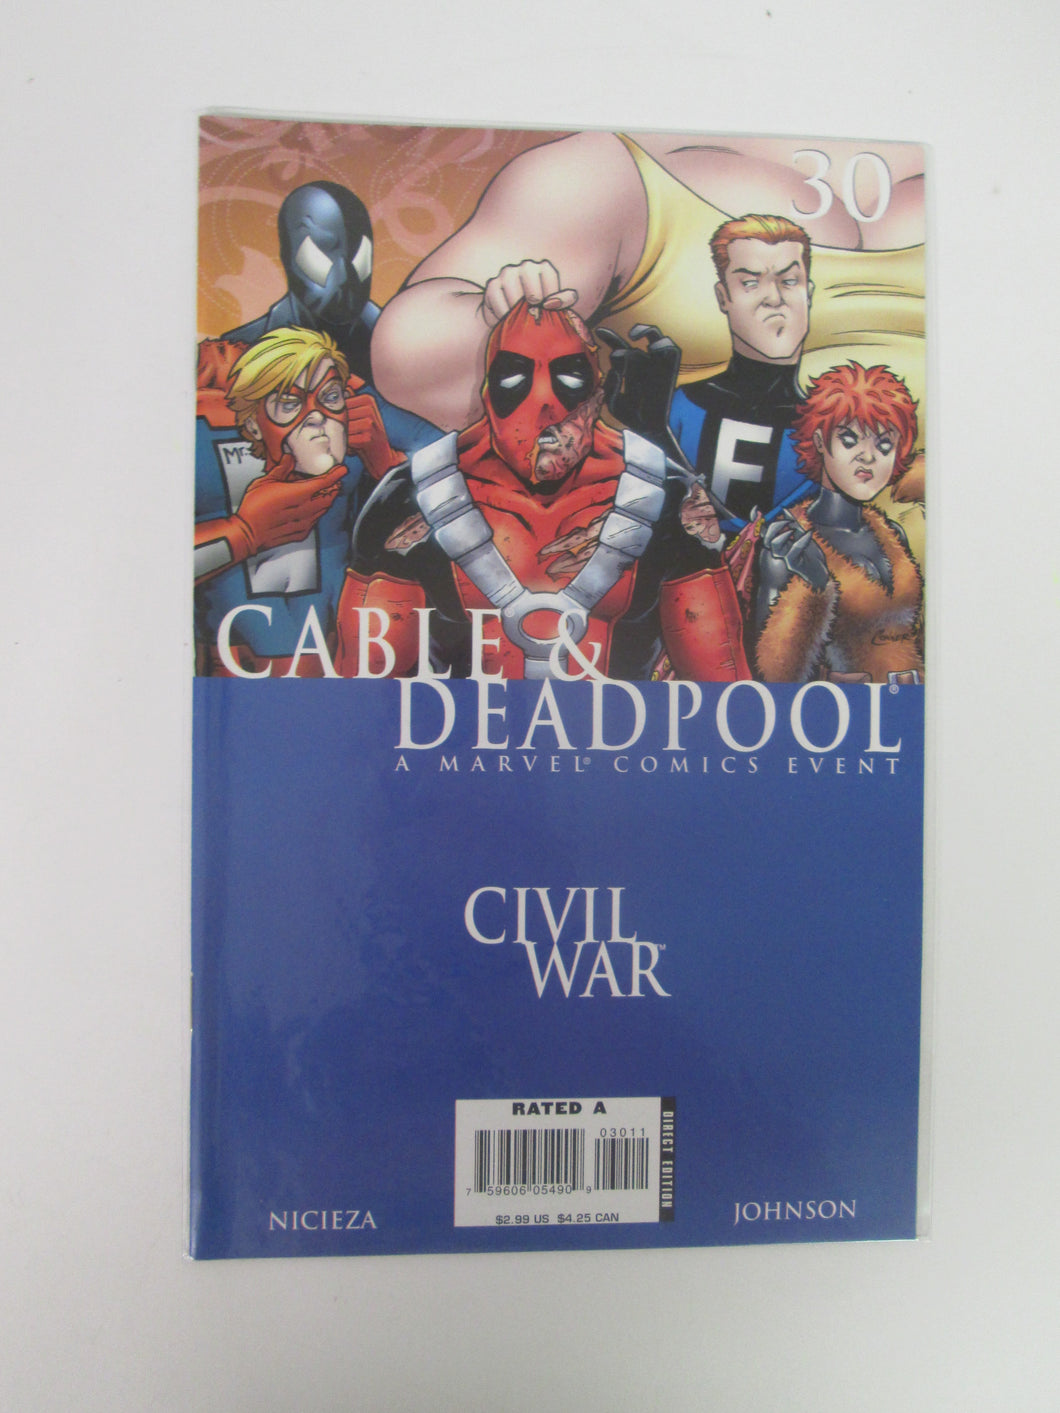 Cable & Deadpool # 30 (Marvel)